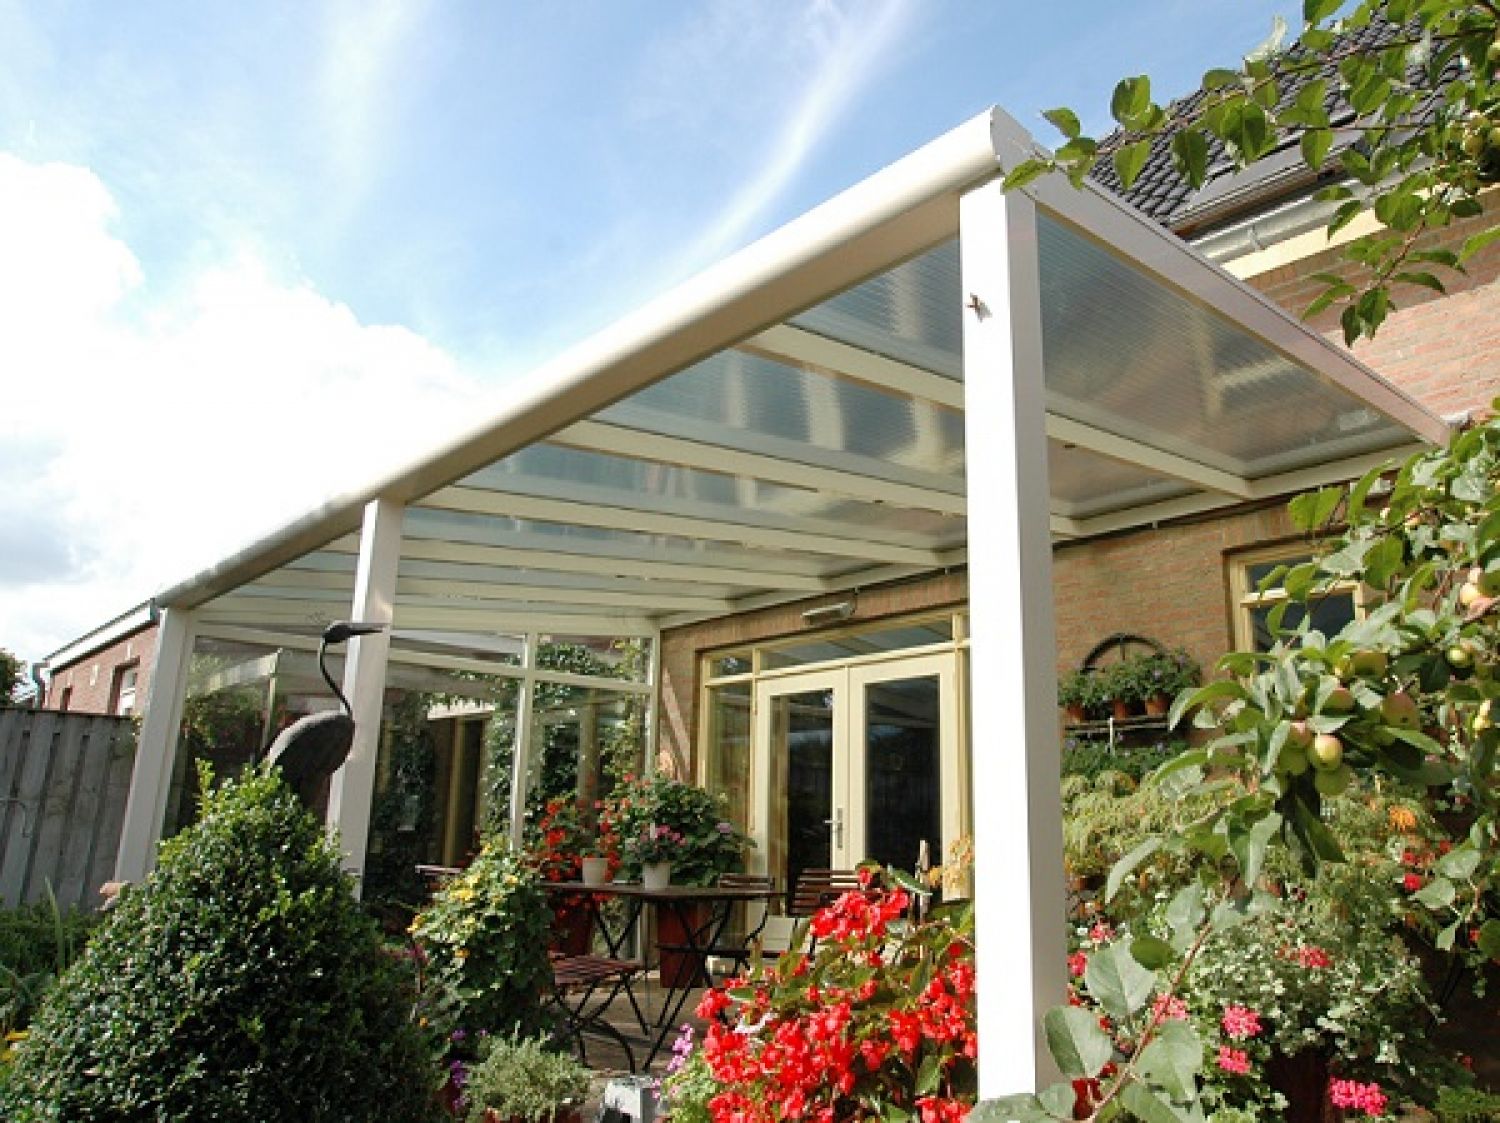 Profiline XXL veranda 1200x250 cm - polycarbonaat dak